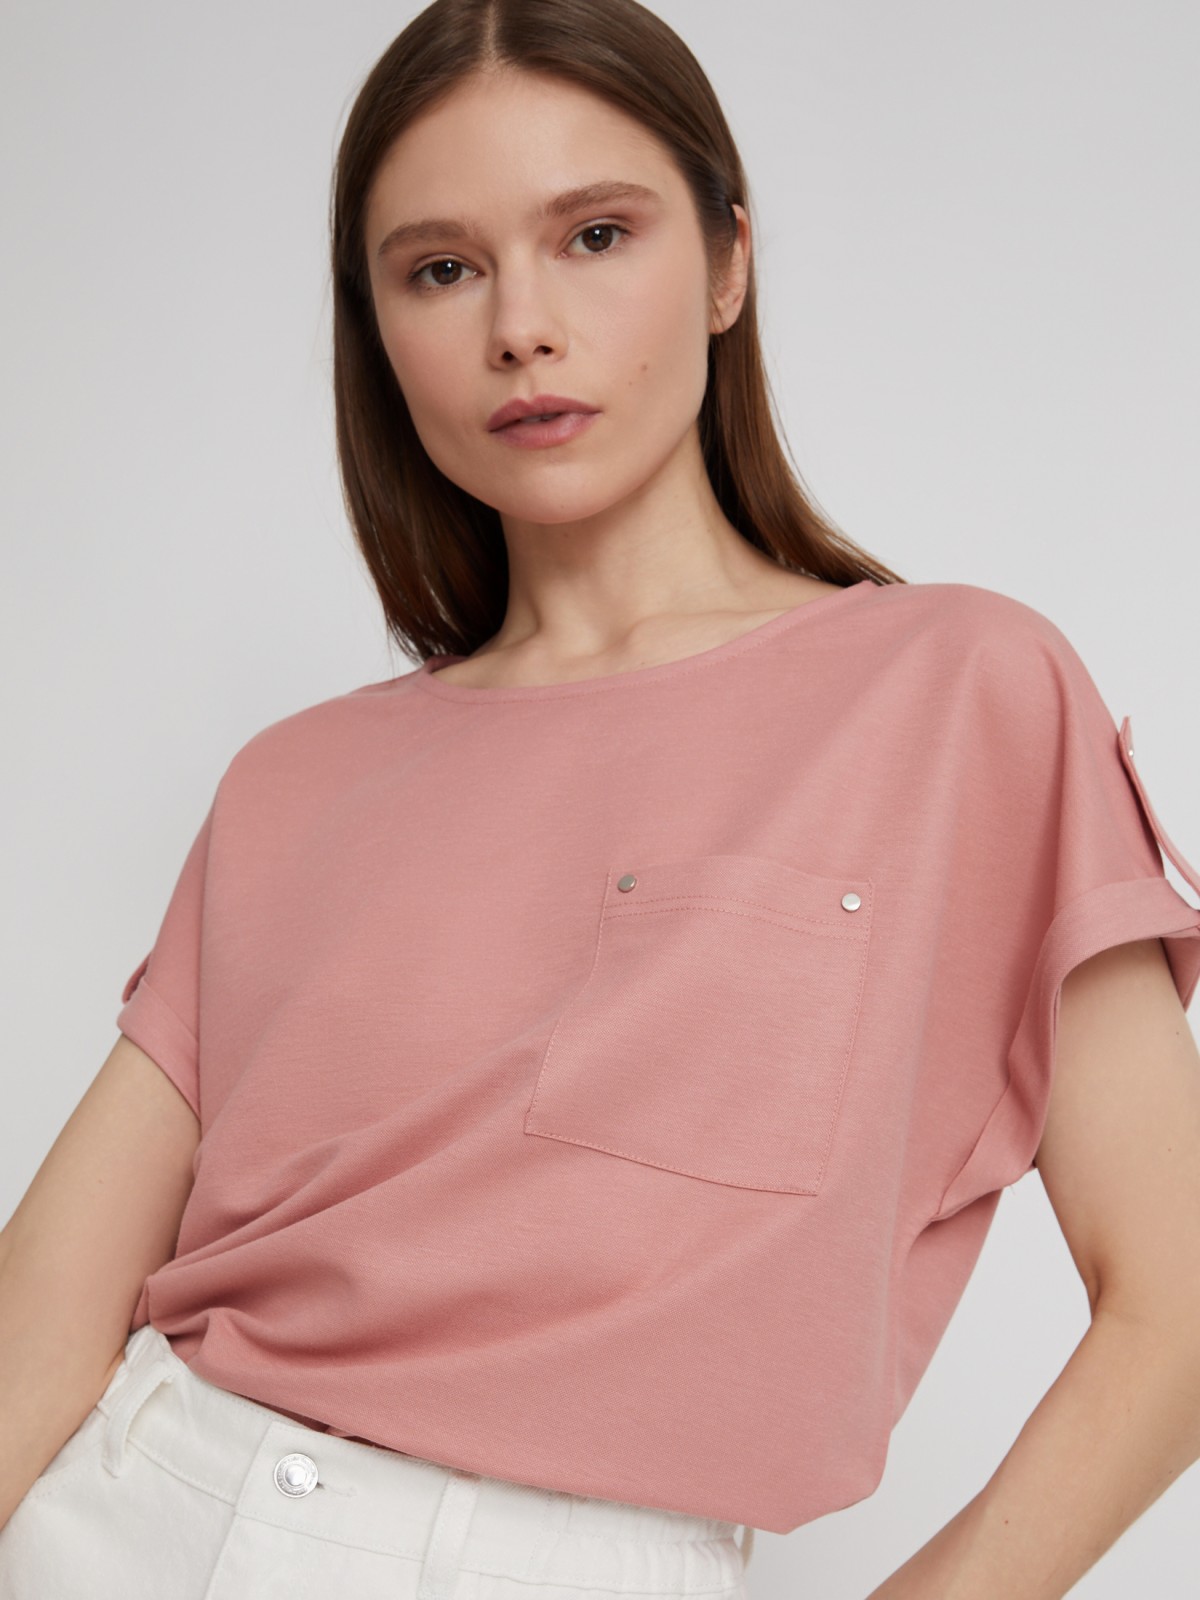 Блузка-футболка с коротким рукавом zolla 023213259023, цвет розовый, размер XS - фото 3